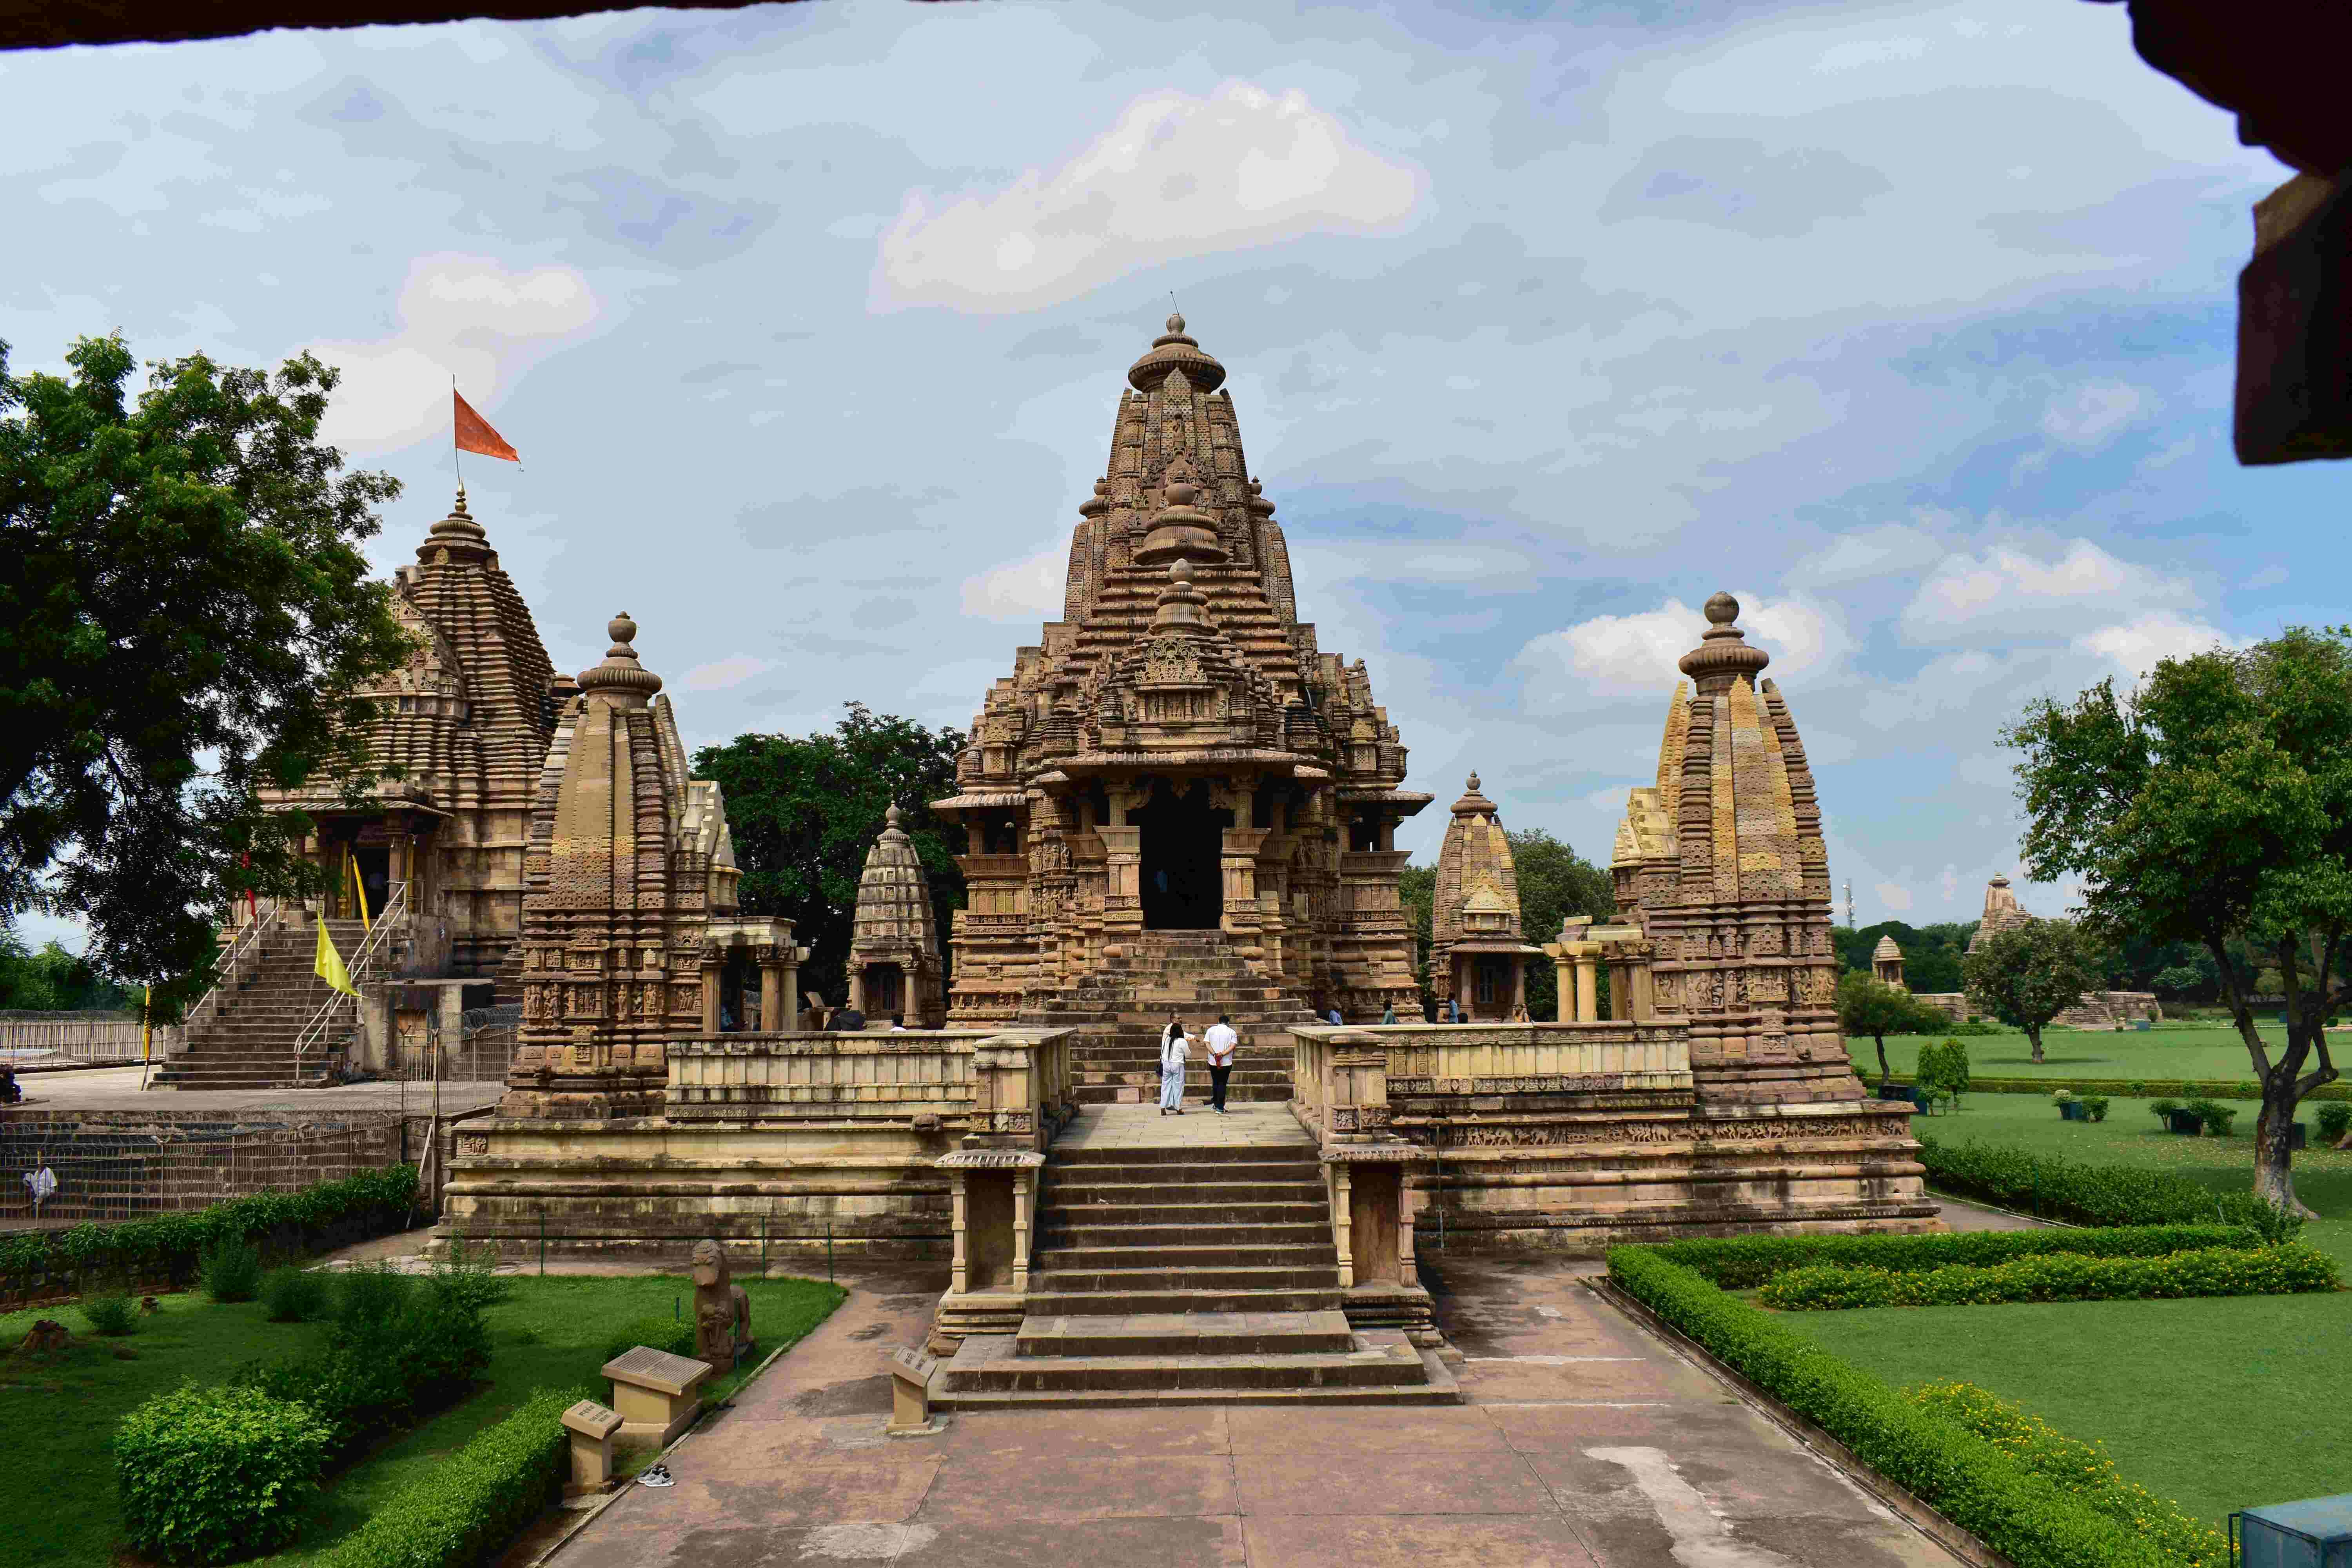 Enchanting Khajuraho: A Journey into India Architectural Splendor